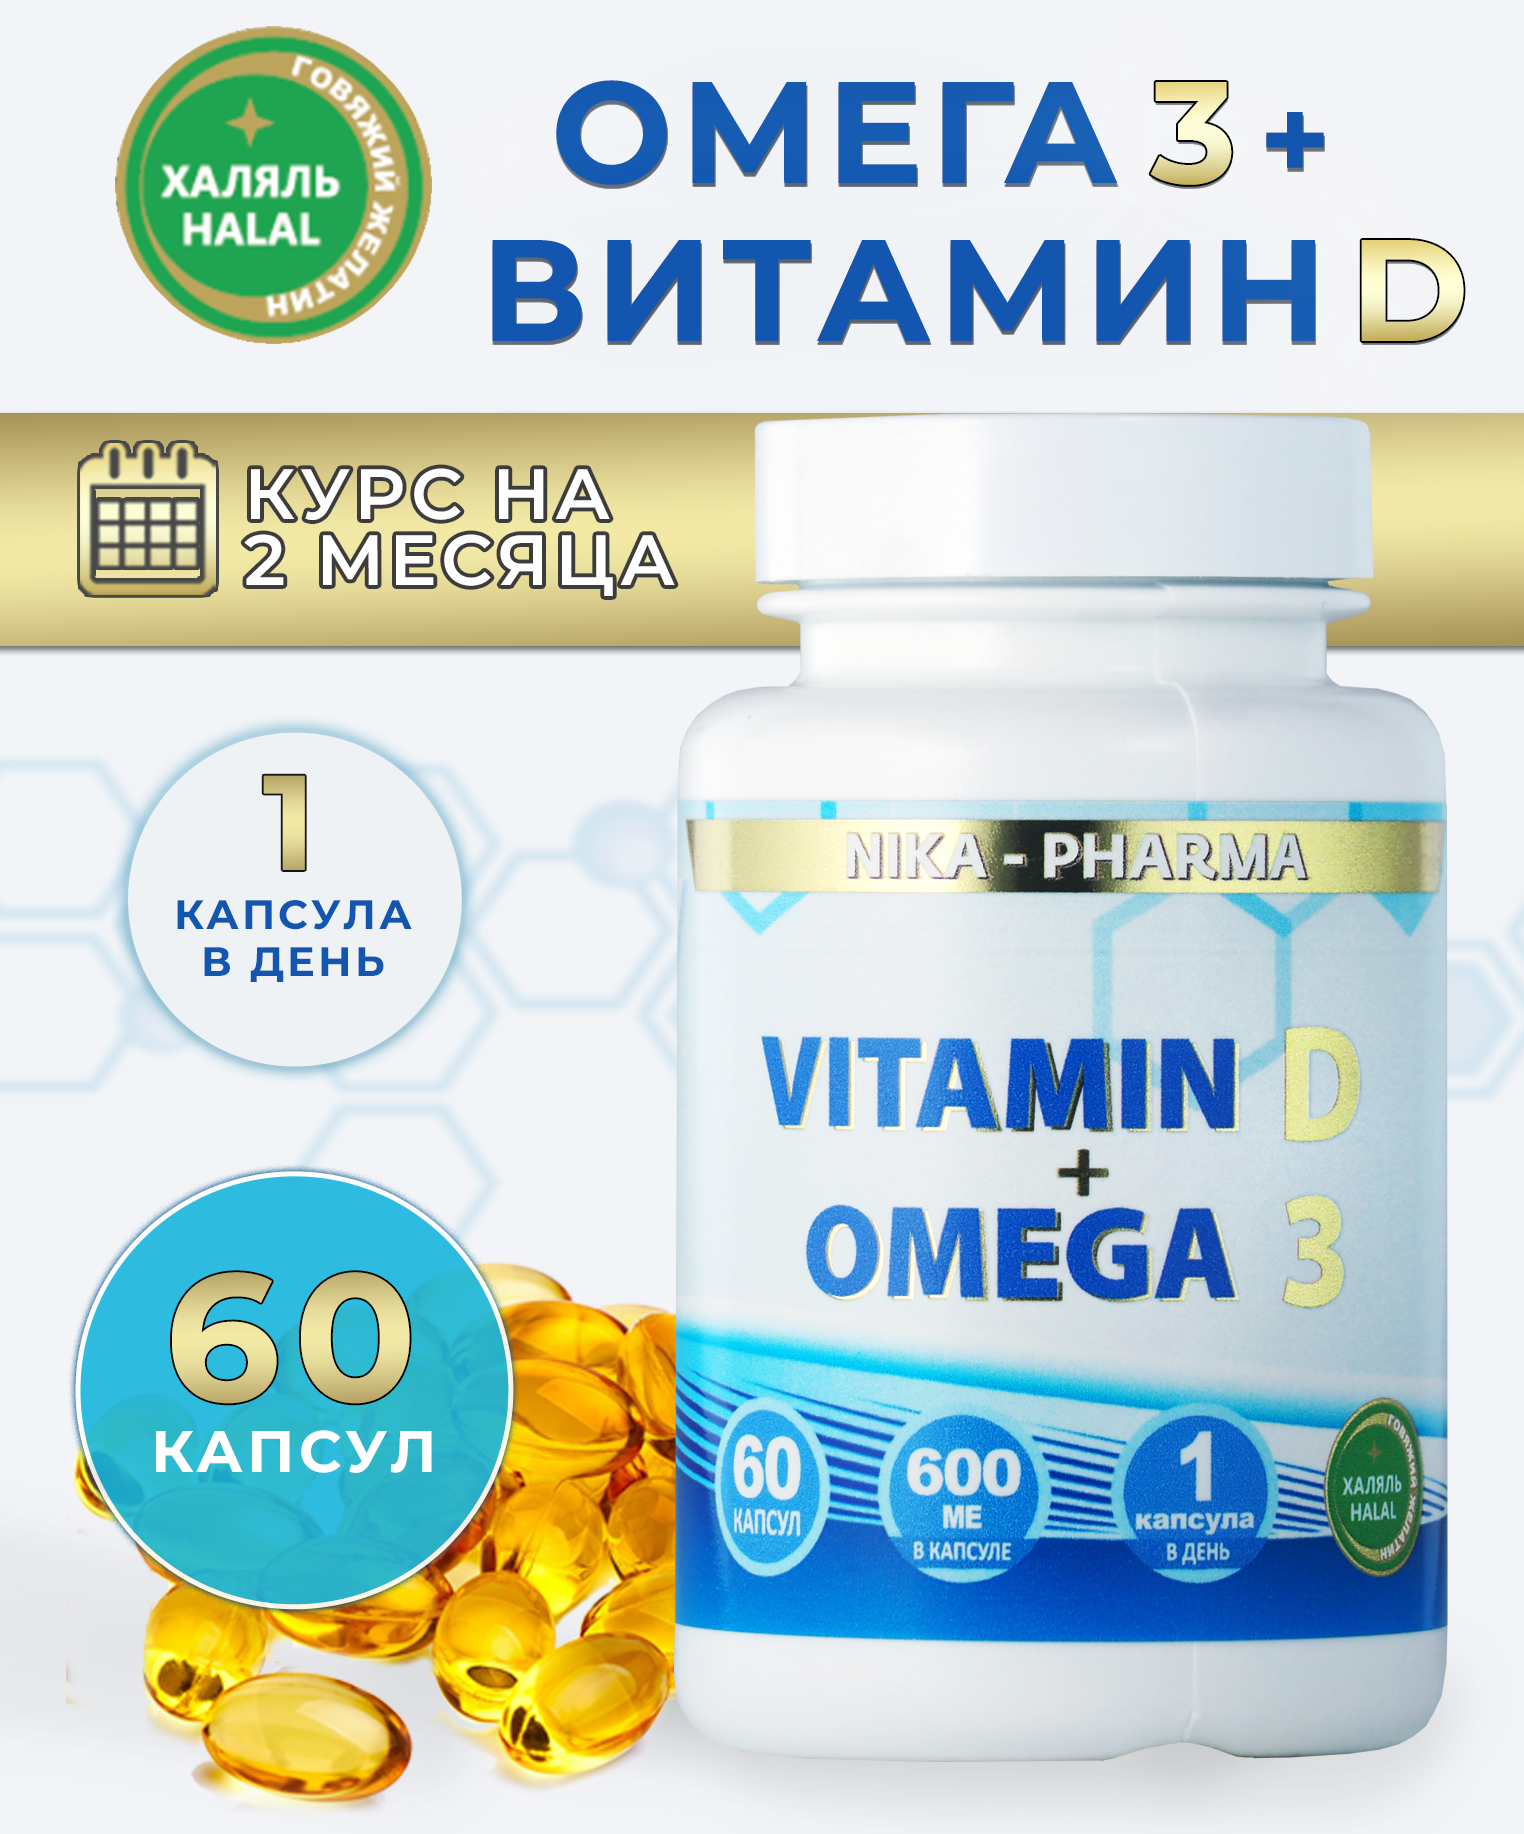 Витамин Д + Омега 3 NIKA-PHARMA Халяль - фото 2